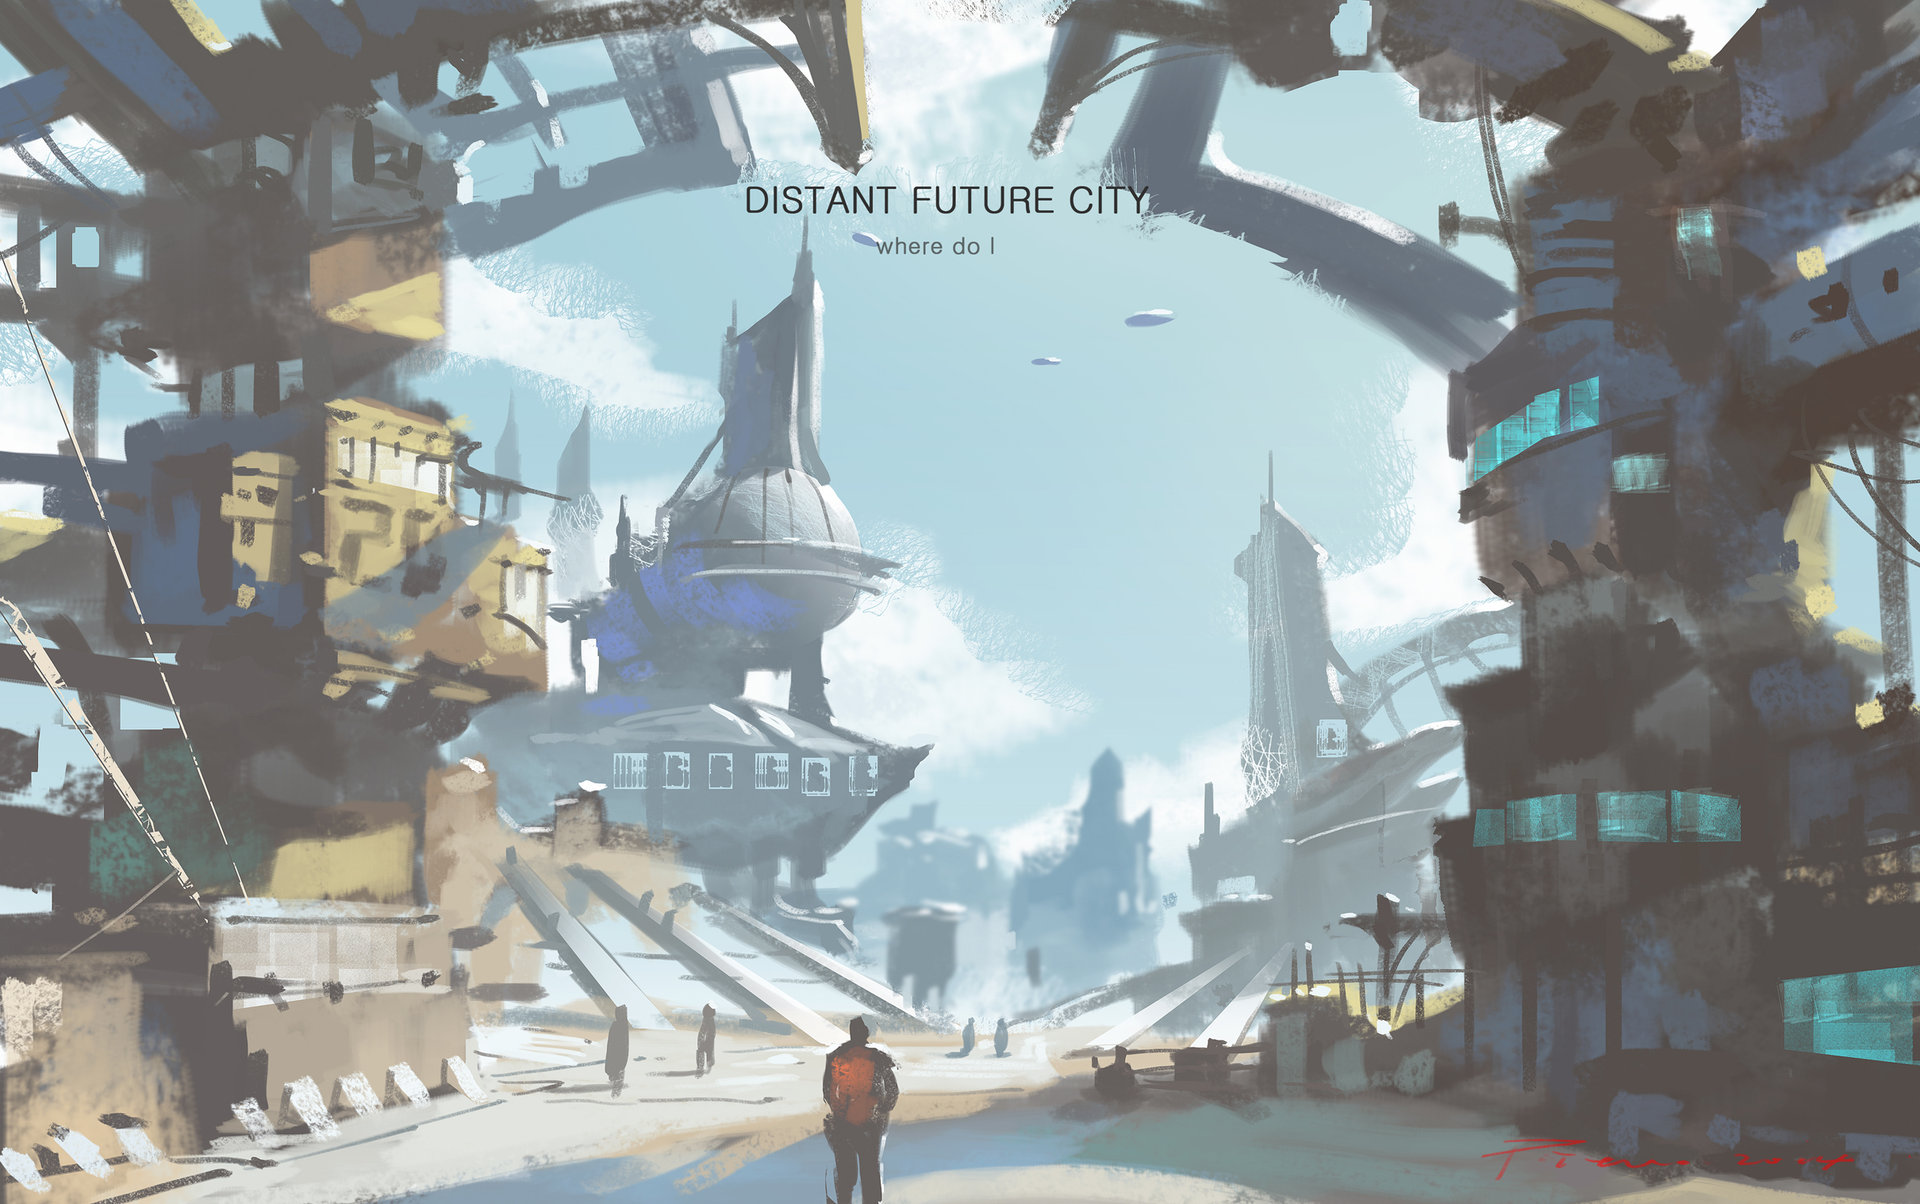 Future City Sketch at Explore collection of Future